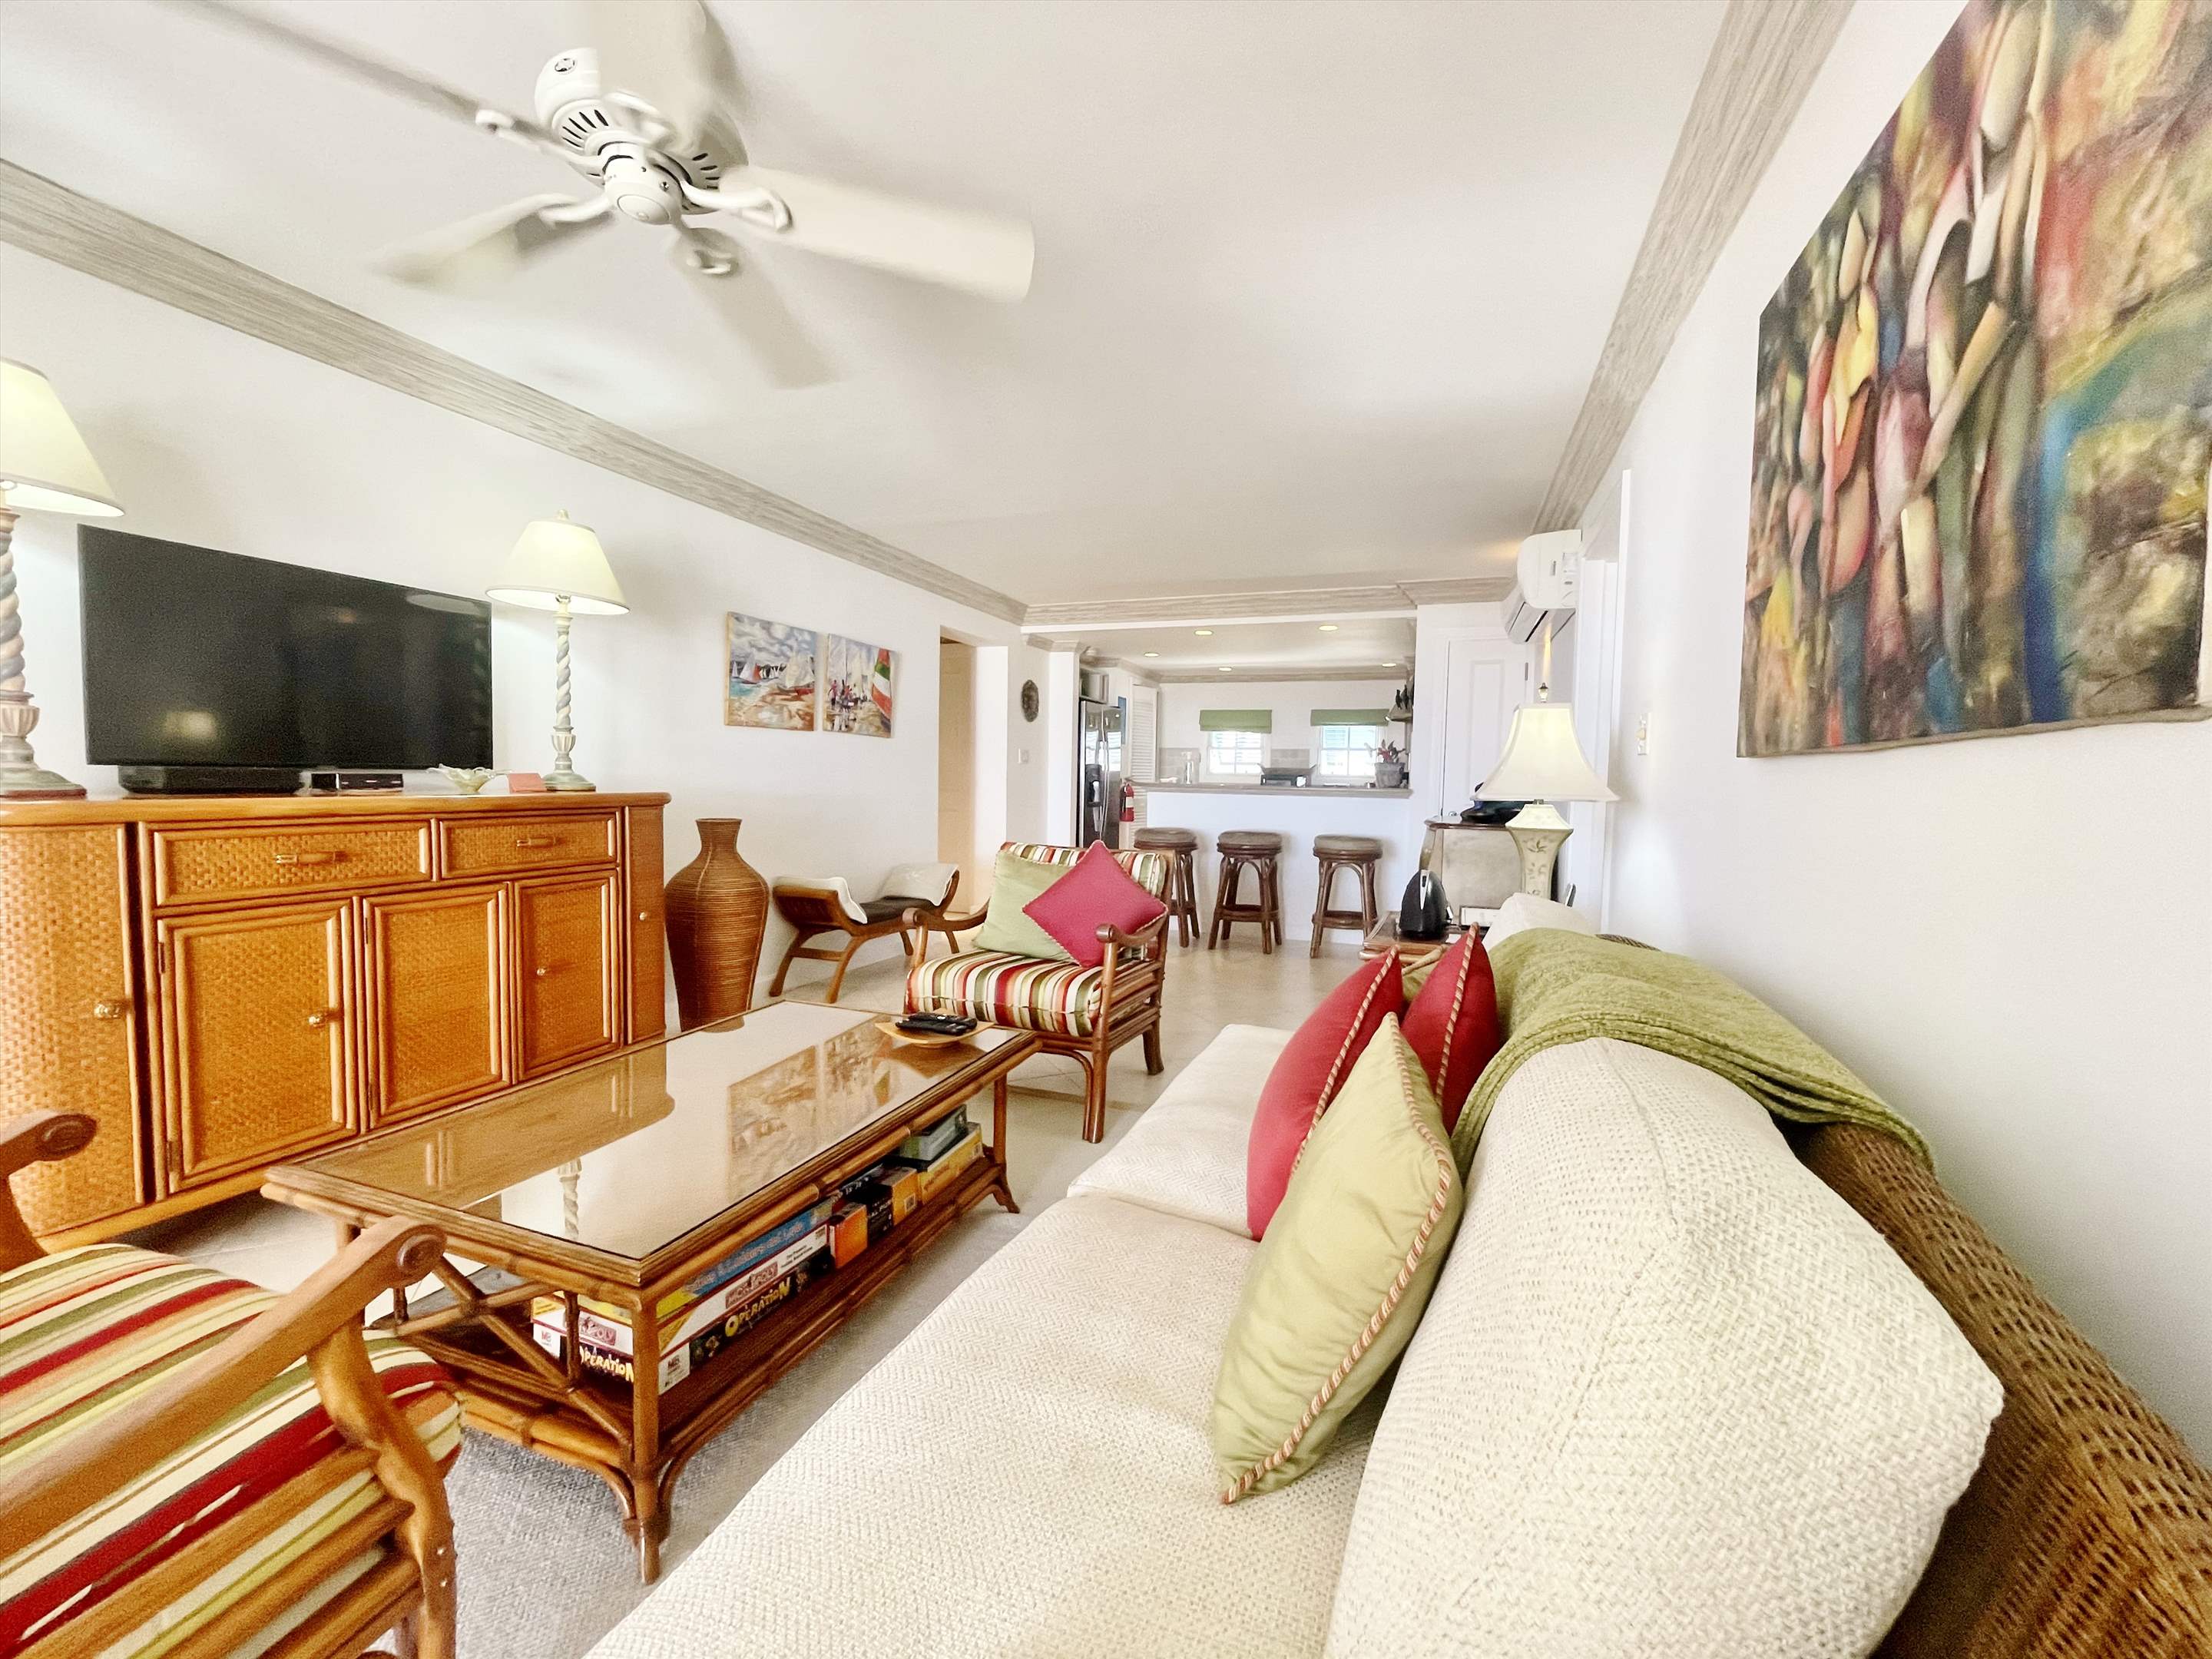 Villas on the Beach 101, 1 bedroom, 1 bedroom apartment in St. James & West Coast, Barbados Photo #7